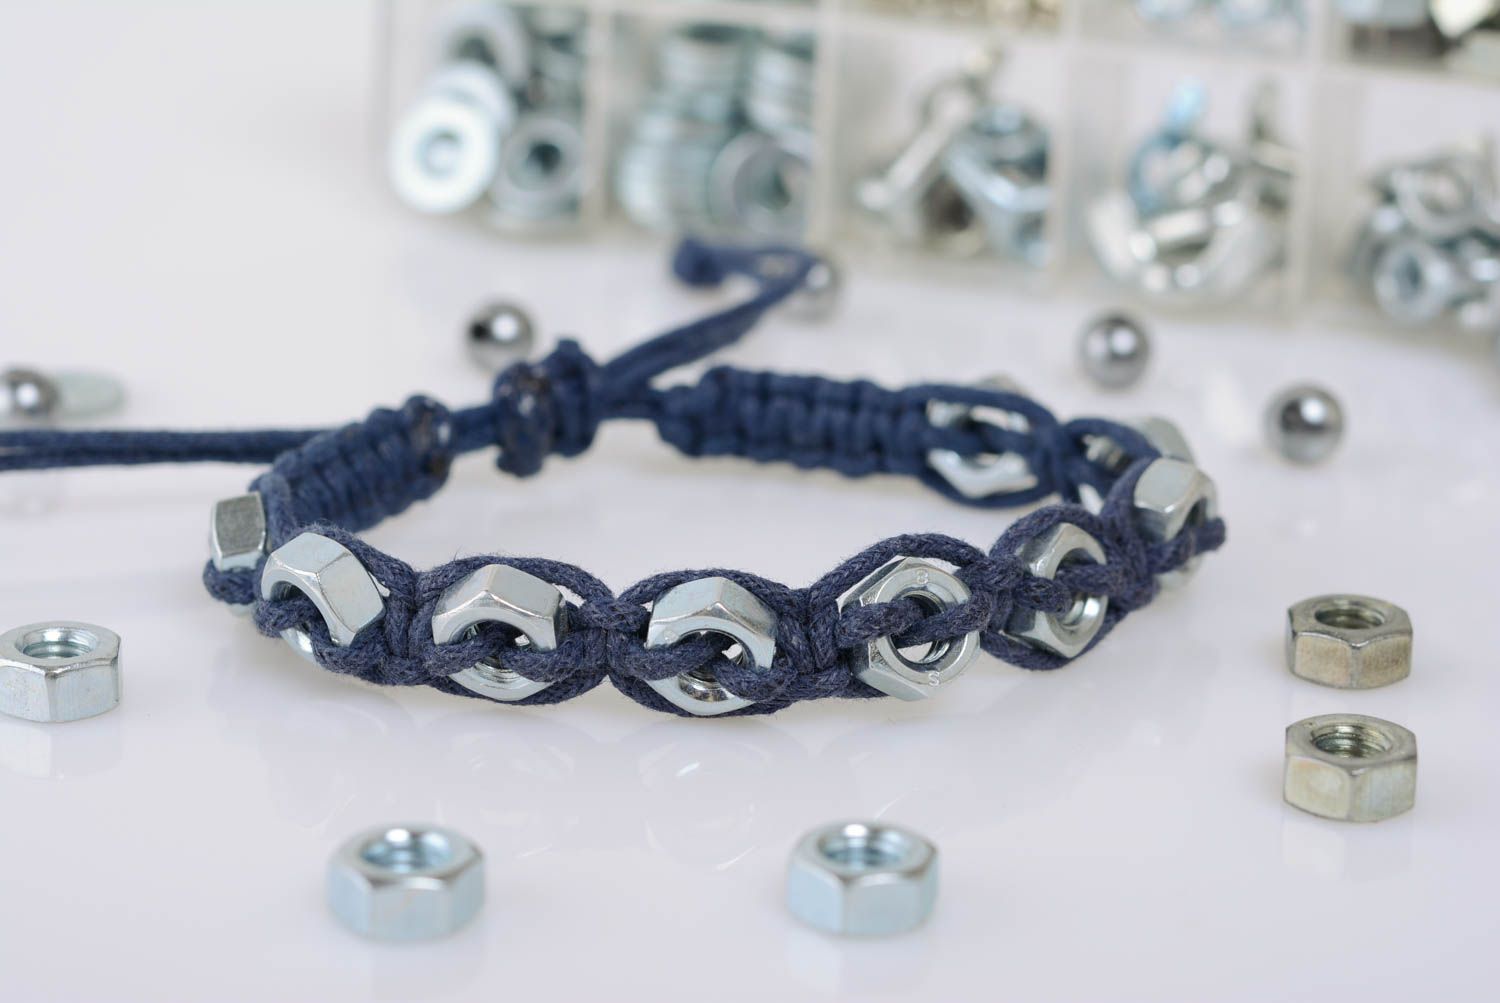 Handmade macrame bracelet made of cord and screw-nuts designer blue jewelry photo 1